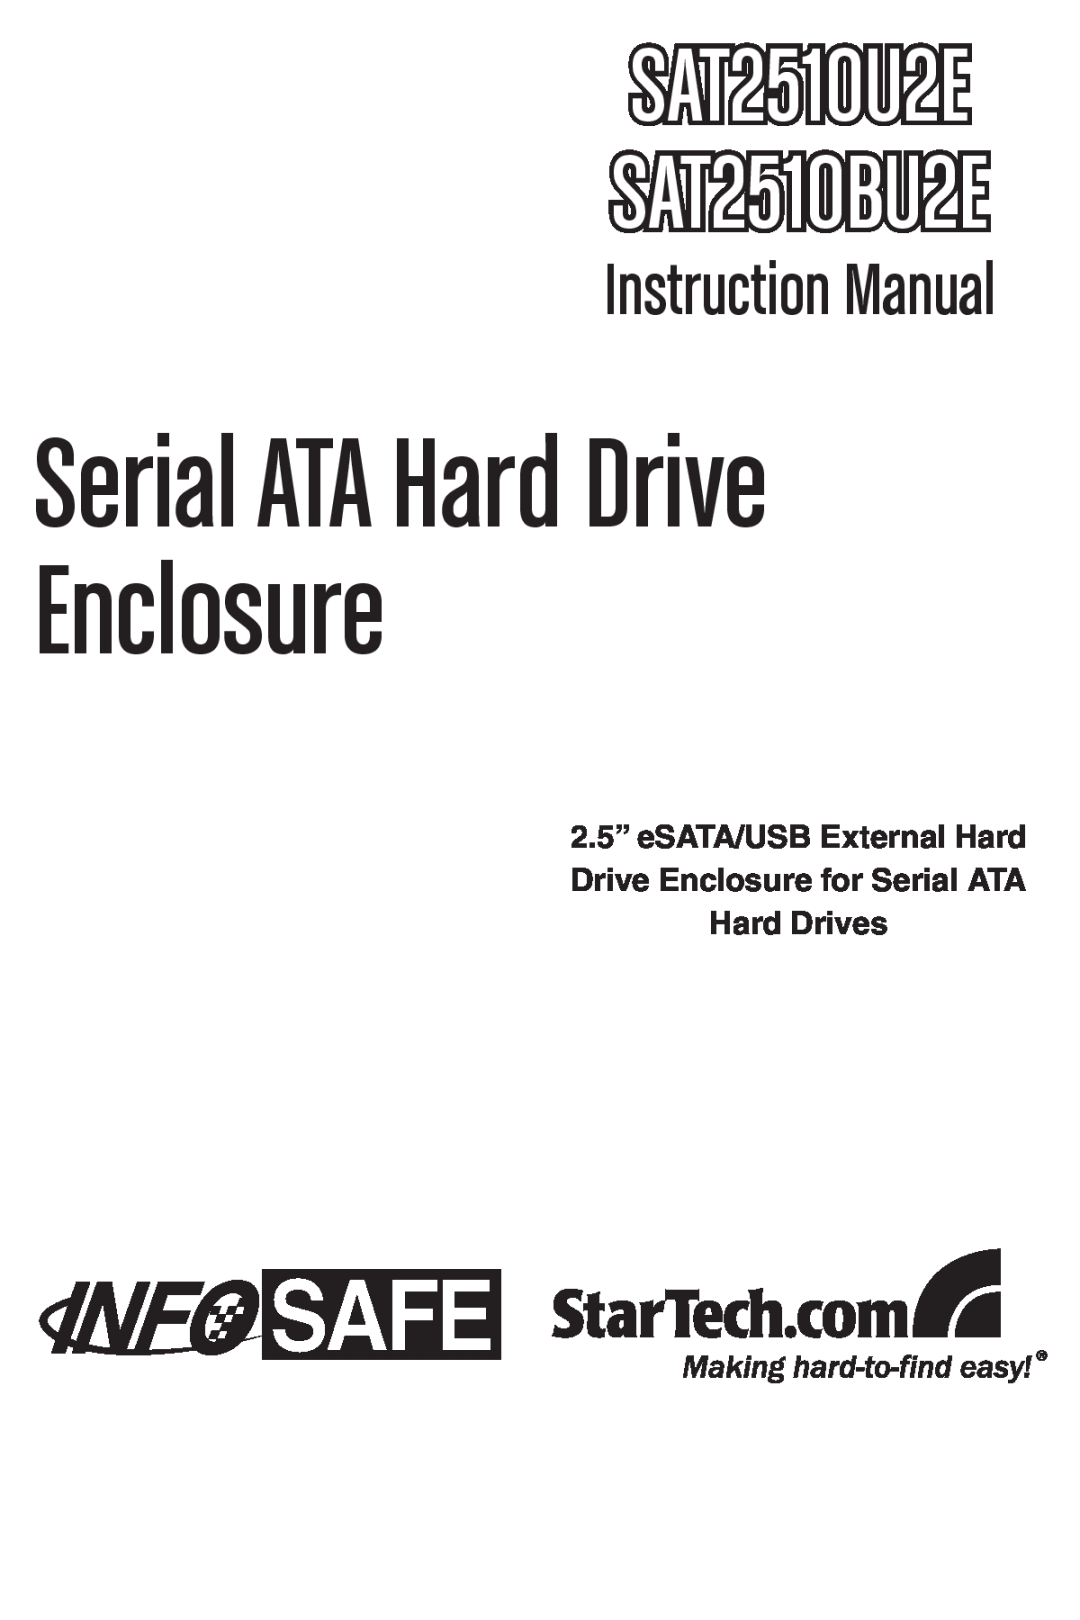 StarTech.com SAT2510BU2E instruction manual Enclosure, Serial ATA Hard Drive, SAT2510U2E, Instruction Manual 